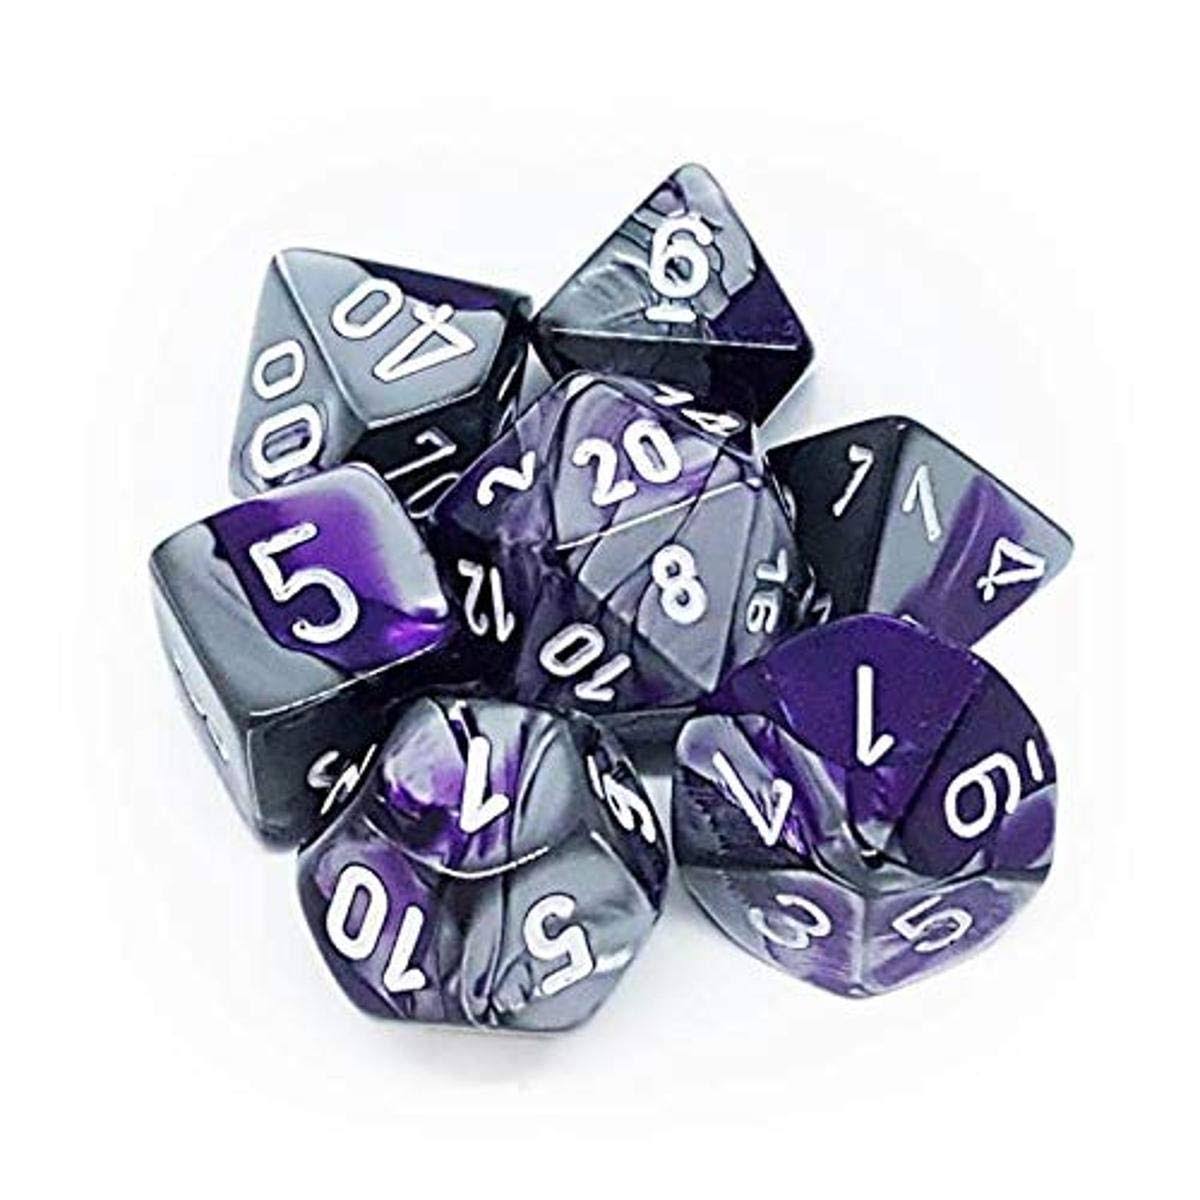 Chessex Polyhedral 7-Die Set - Gemini - Purple-Steel With White